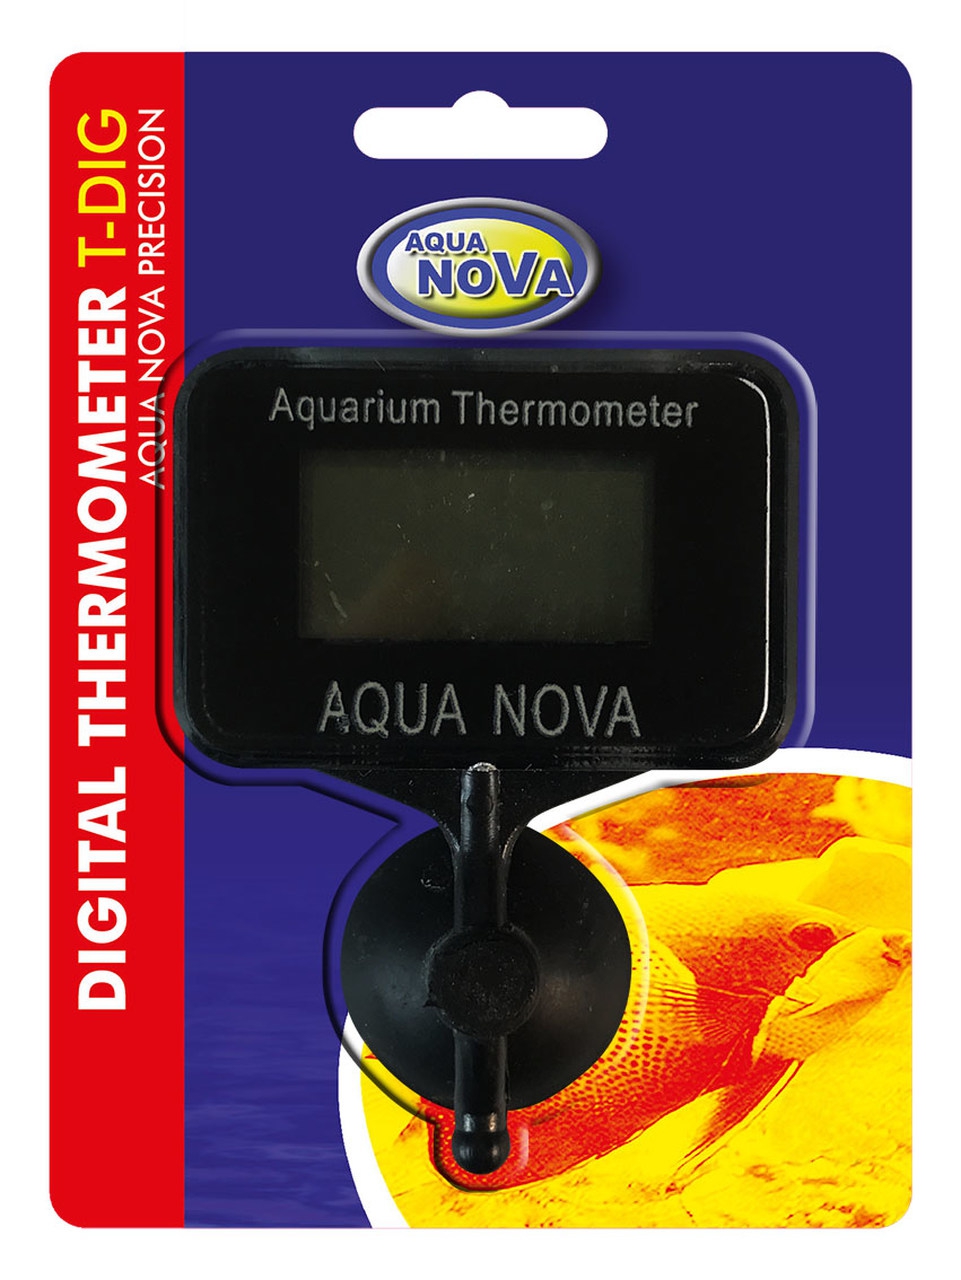 Aqua Nova digitale thermometer, Thermometers